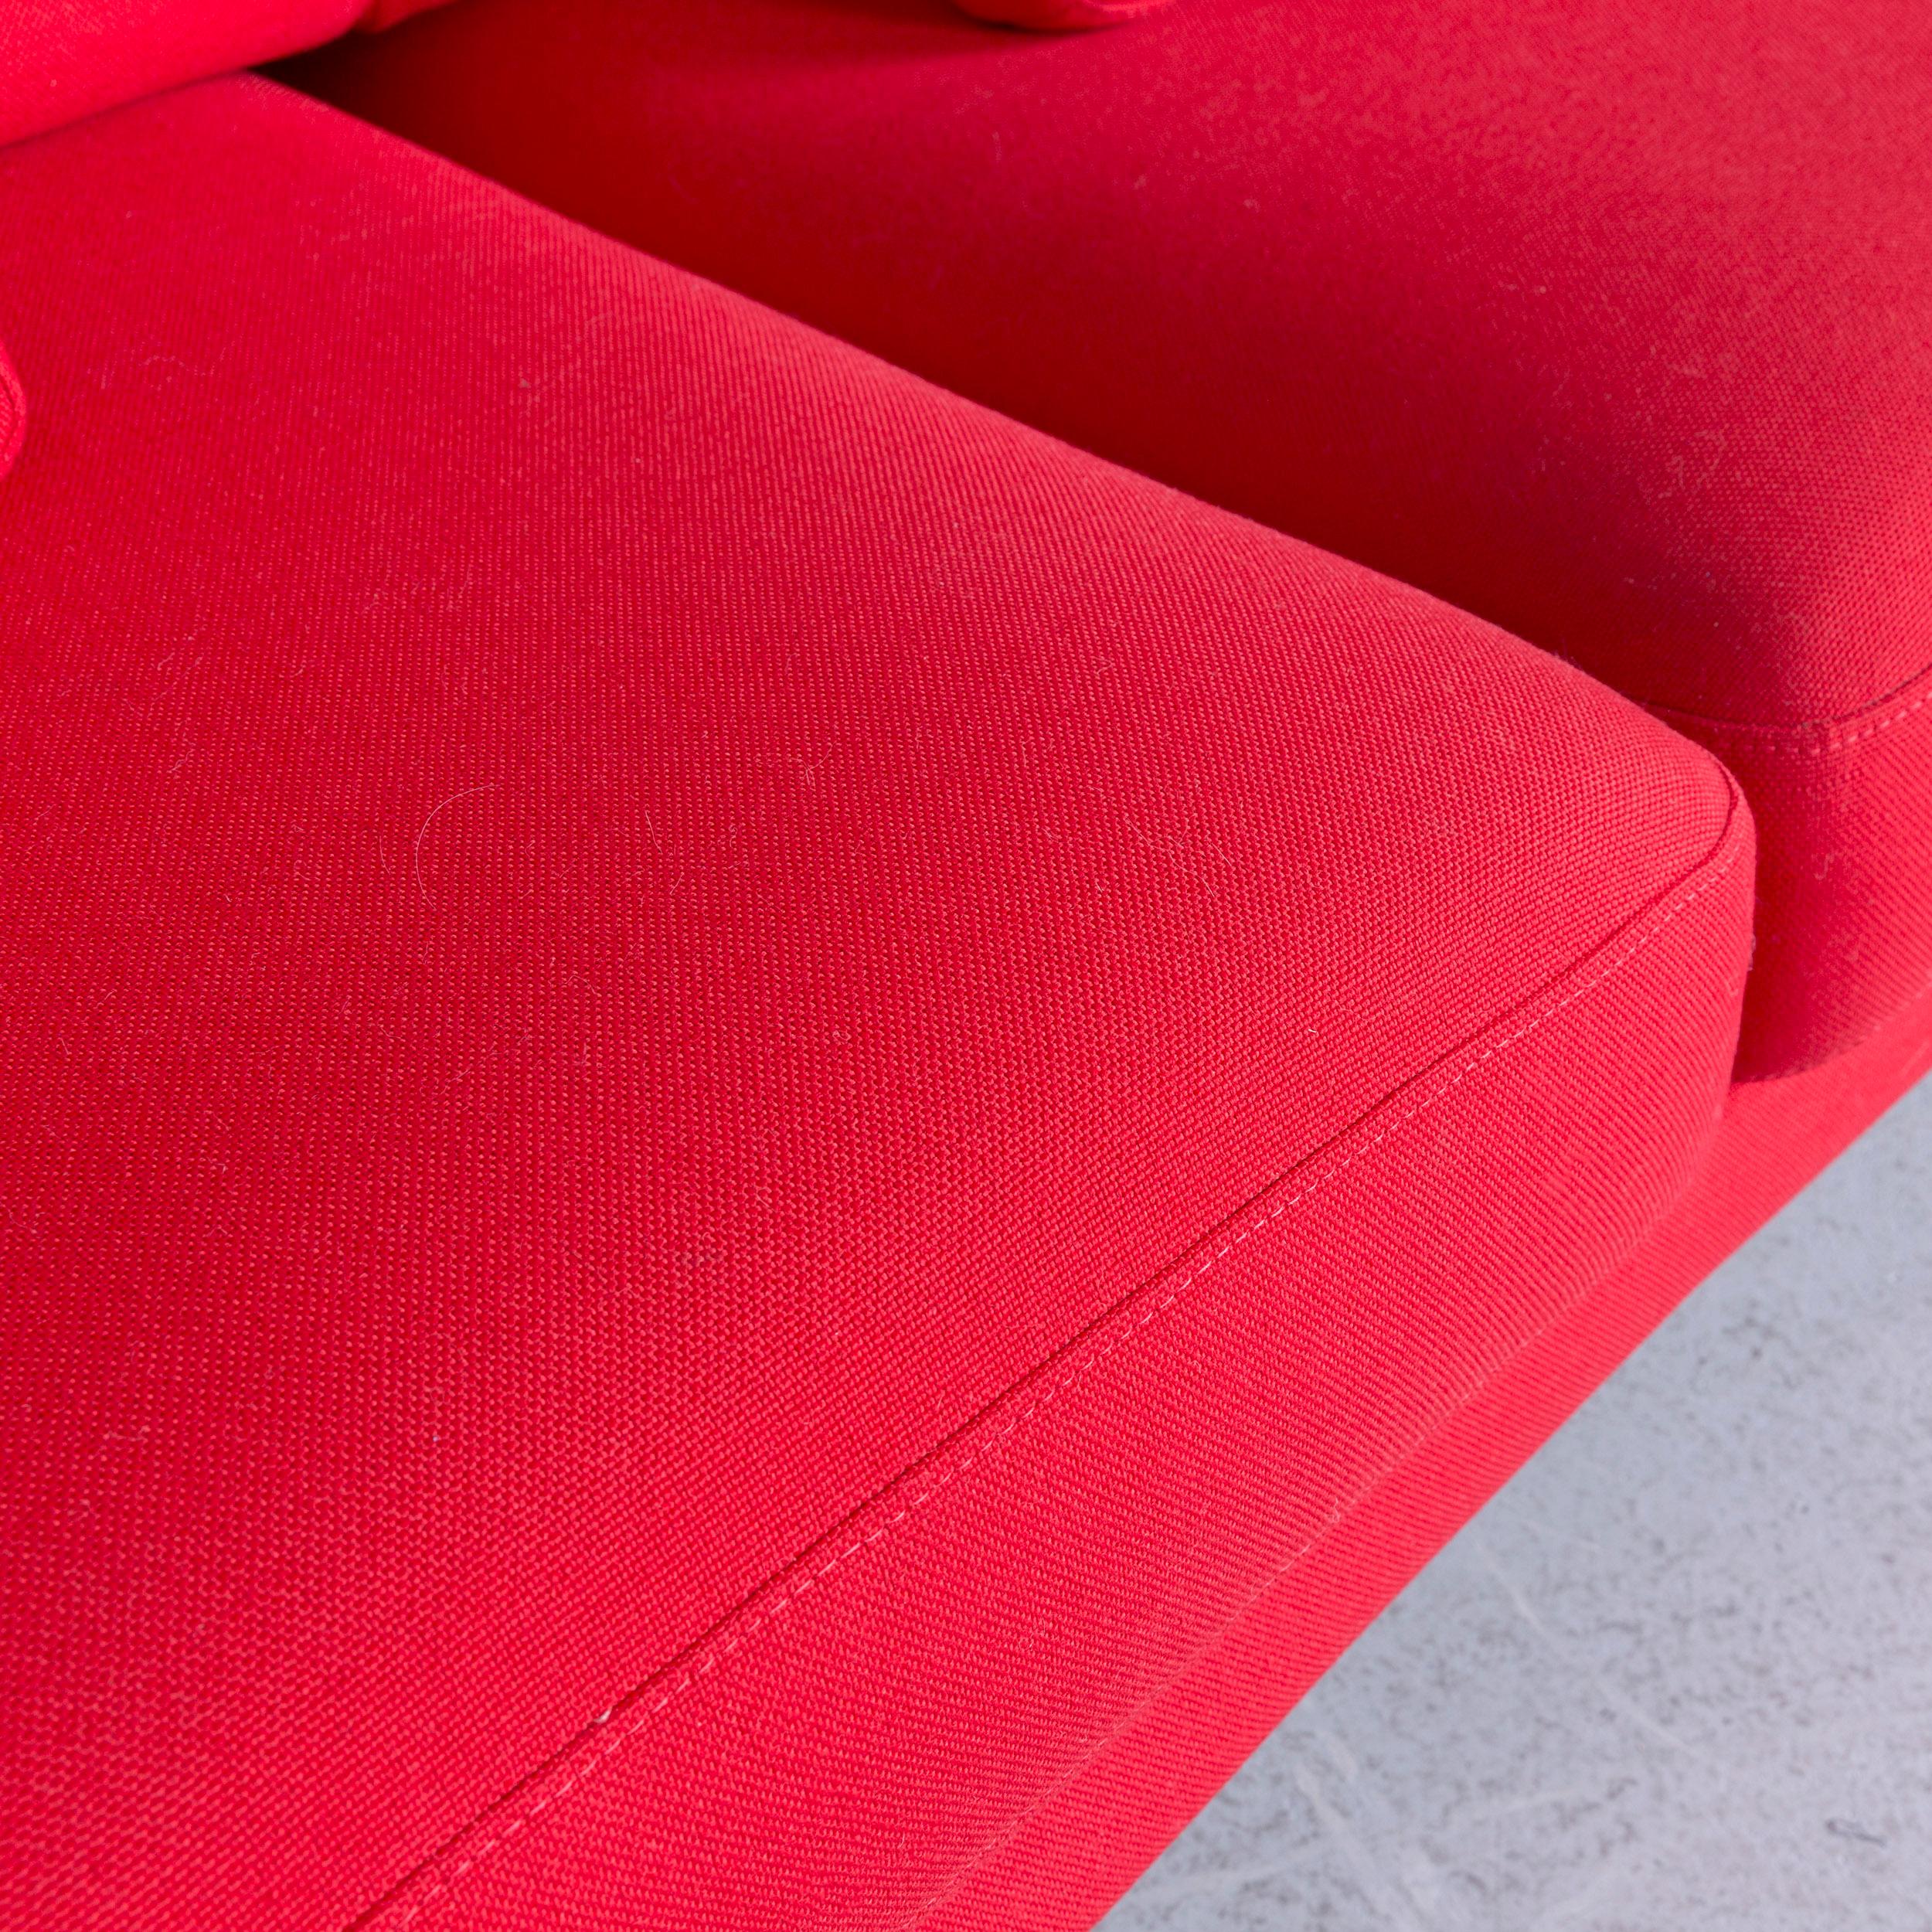 Contemporary Rolf Benz Designer Ego Fabricr Corner-Sofa Red Four-Seat Couch For Sale